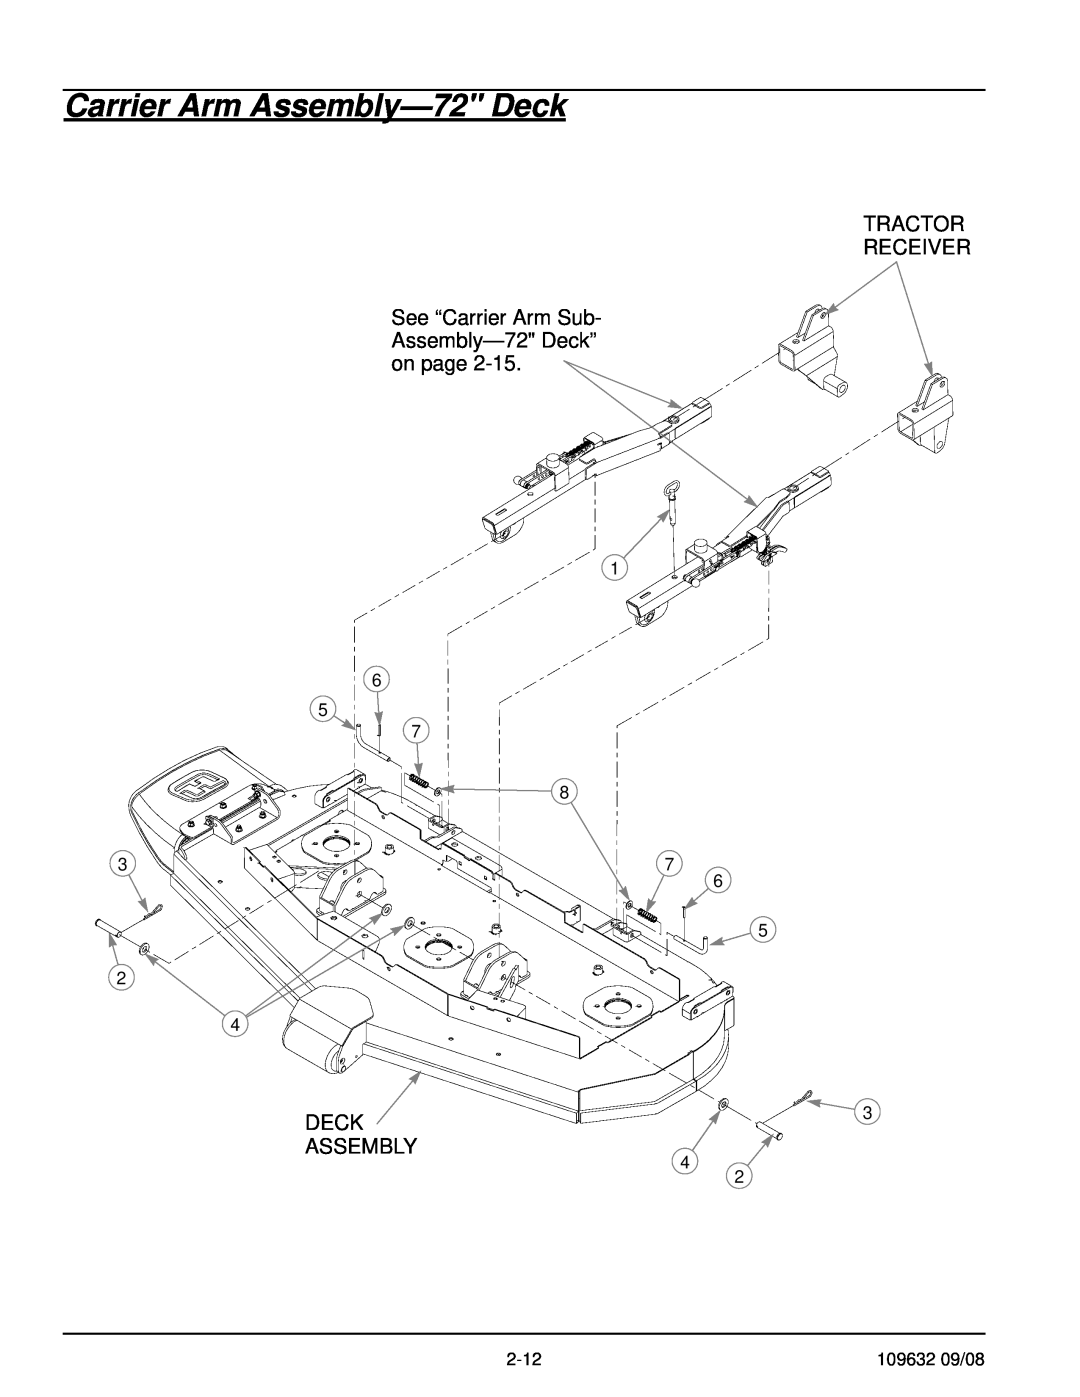 Hustler Turf 928739, 928721 Carrier Arm Assembly-72 Deck, See “Carrier Arm Sub Assembly-72 Deck” on page, Tractor Receiver 